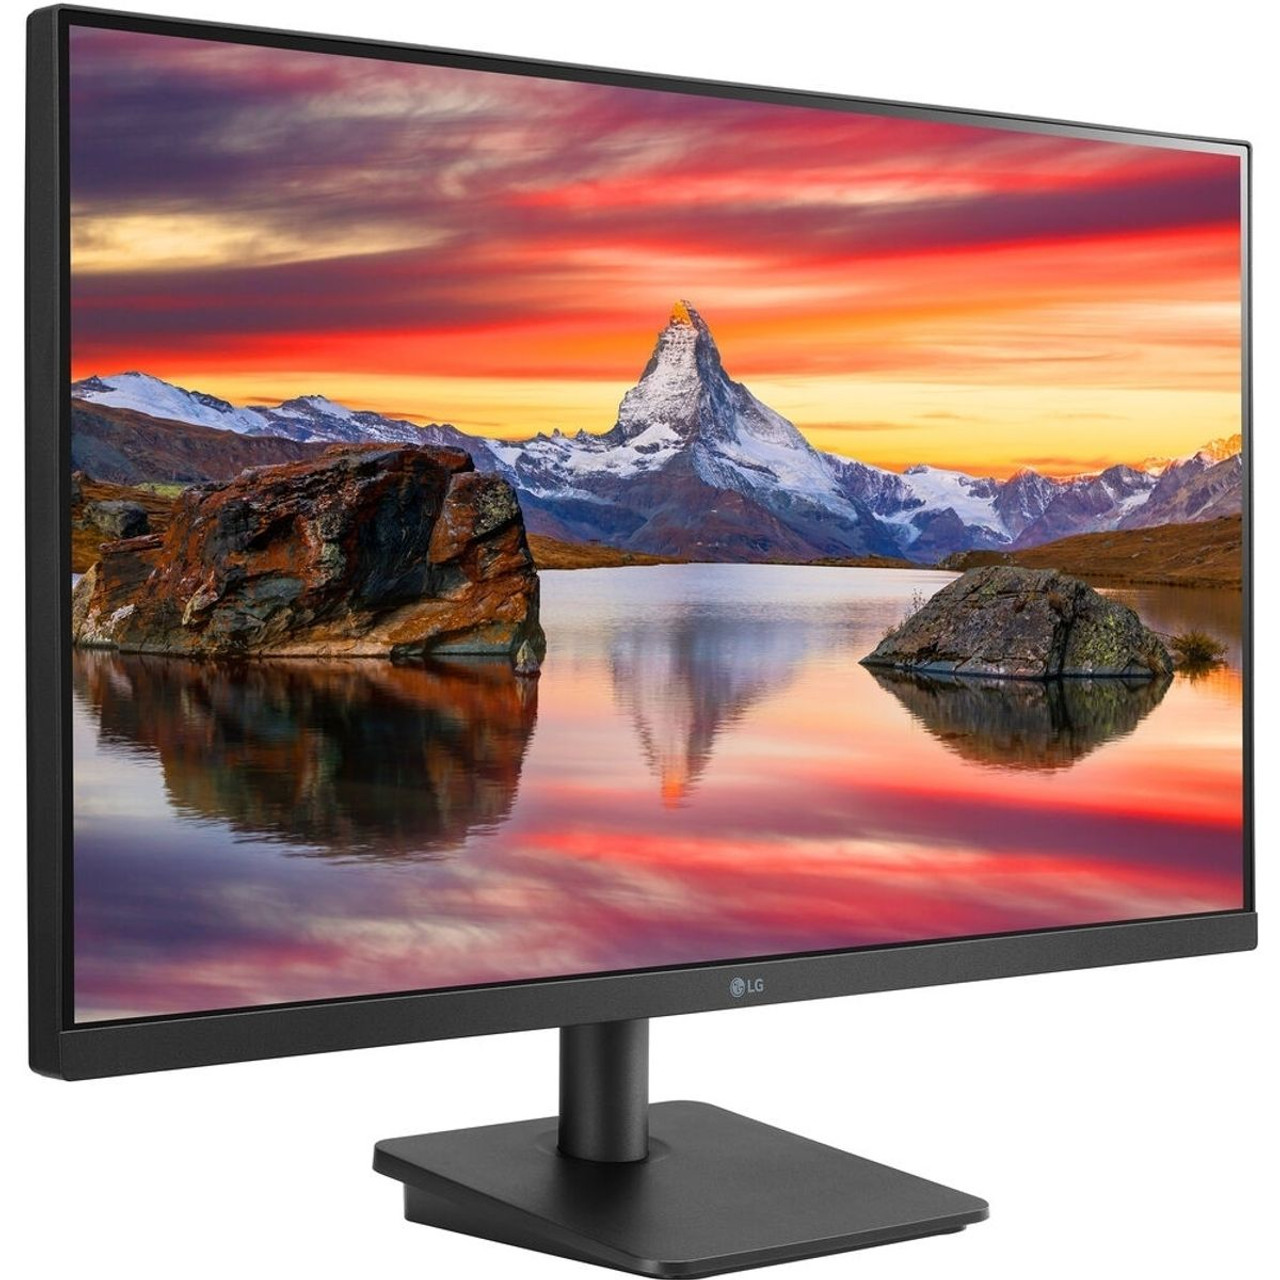 LG 27'' Full HD IPS Monitor with AMD FreeSync™  product image